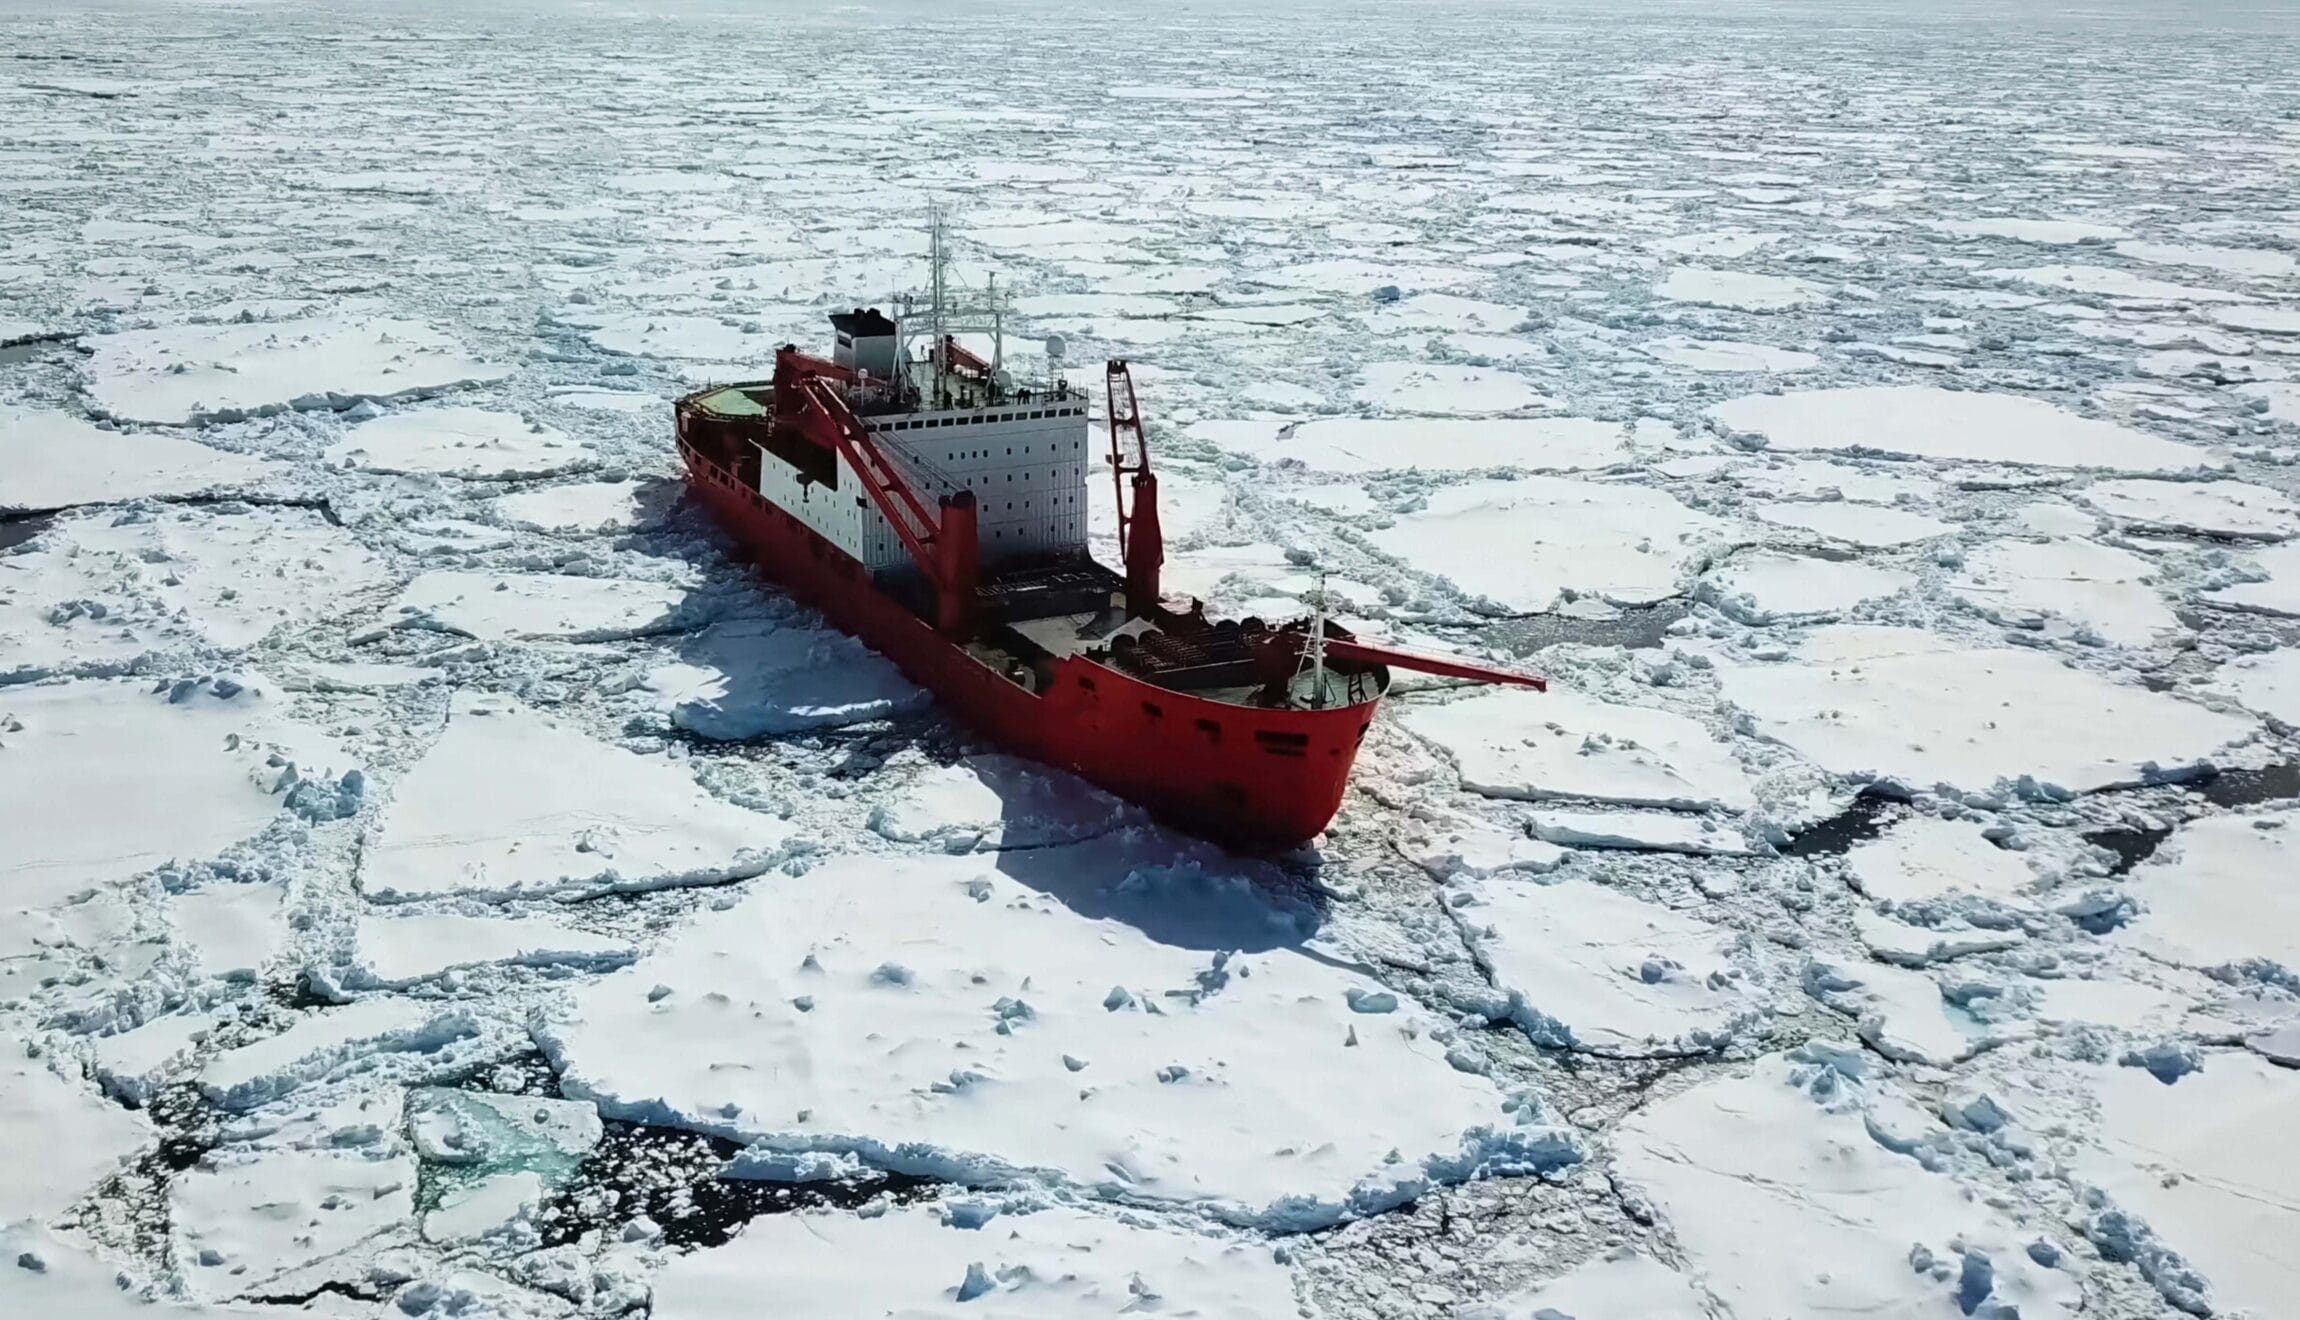 Ship in Antarctic waters